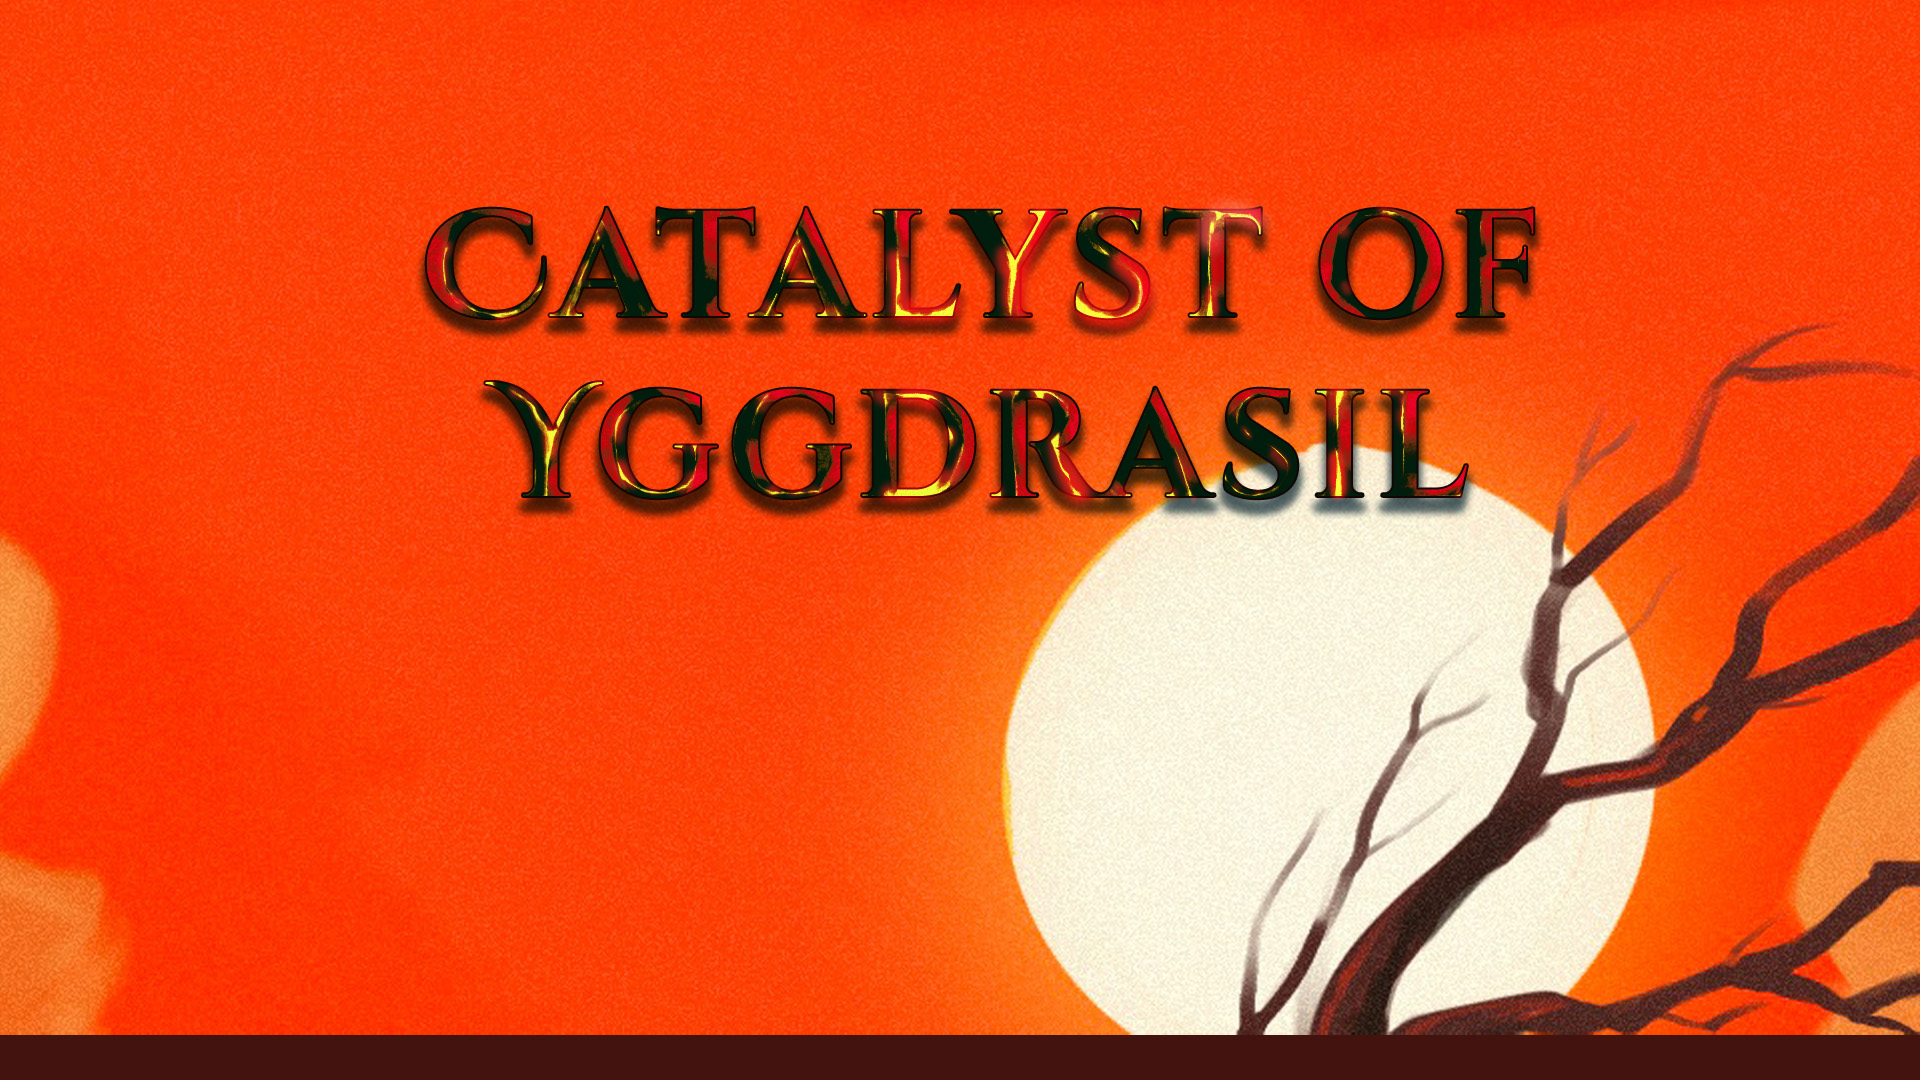 Catalyst of Yggdrasil